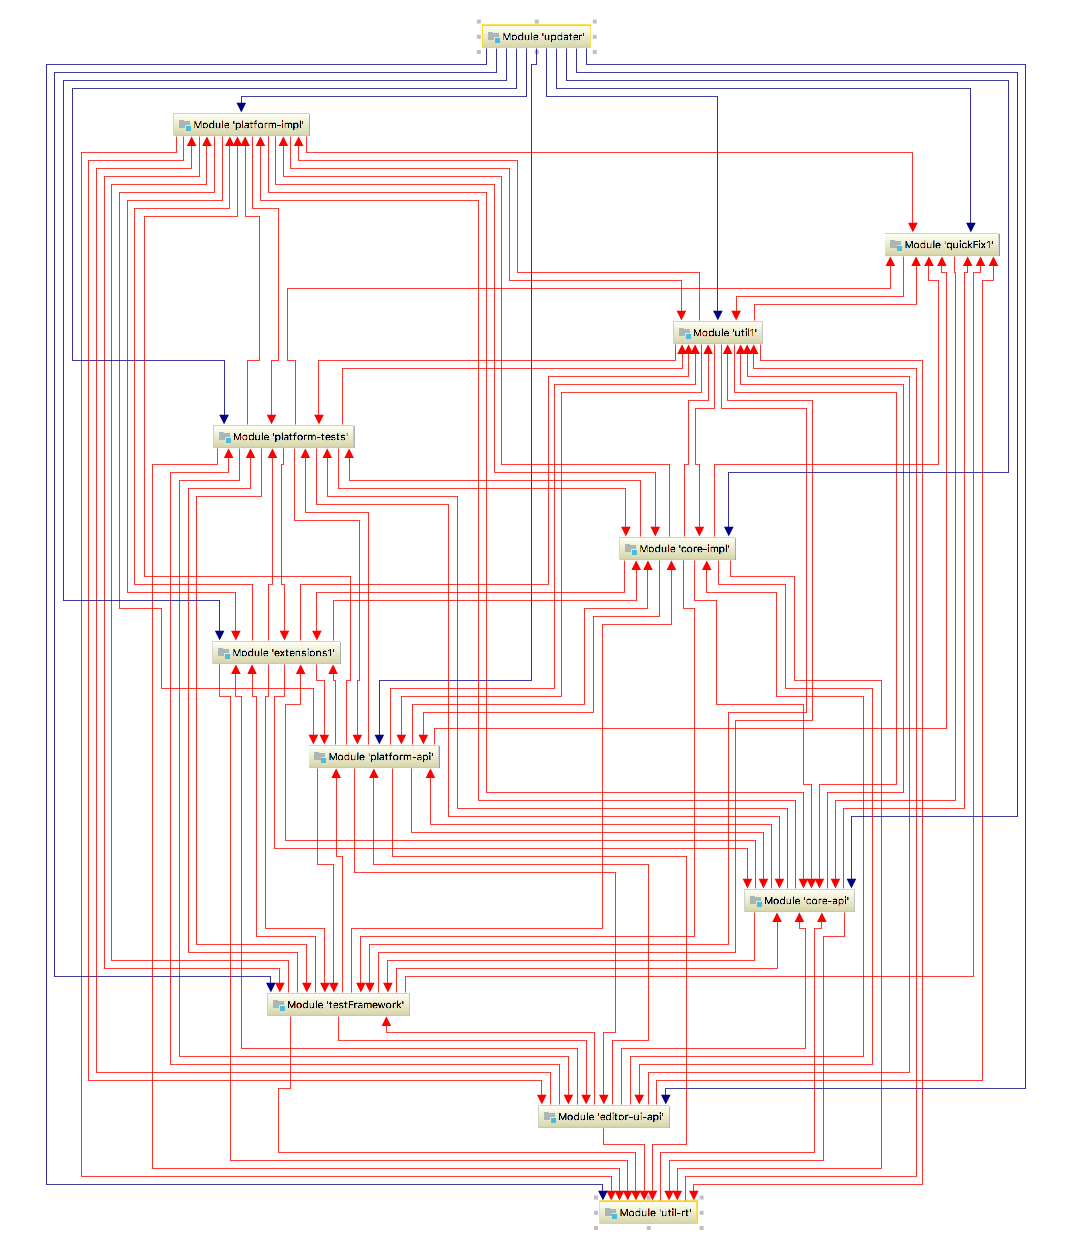 the diagram output